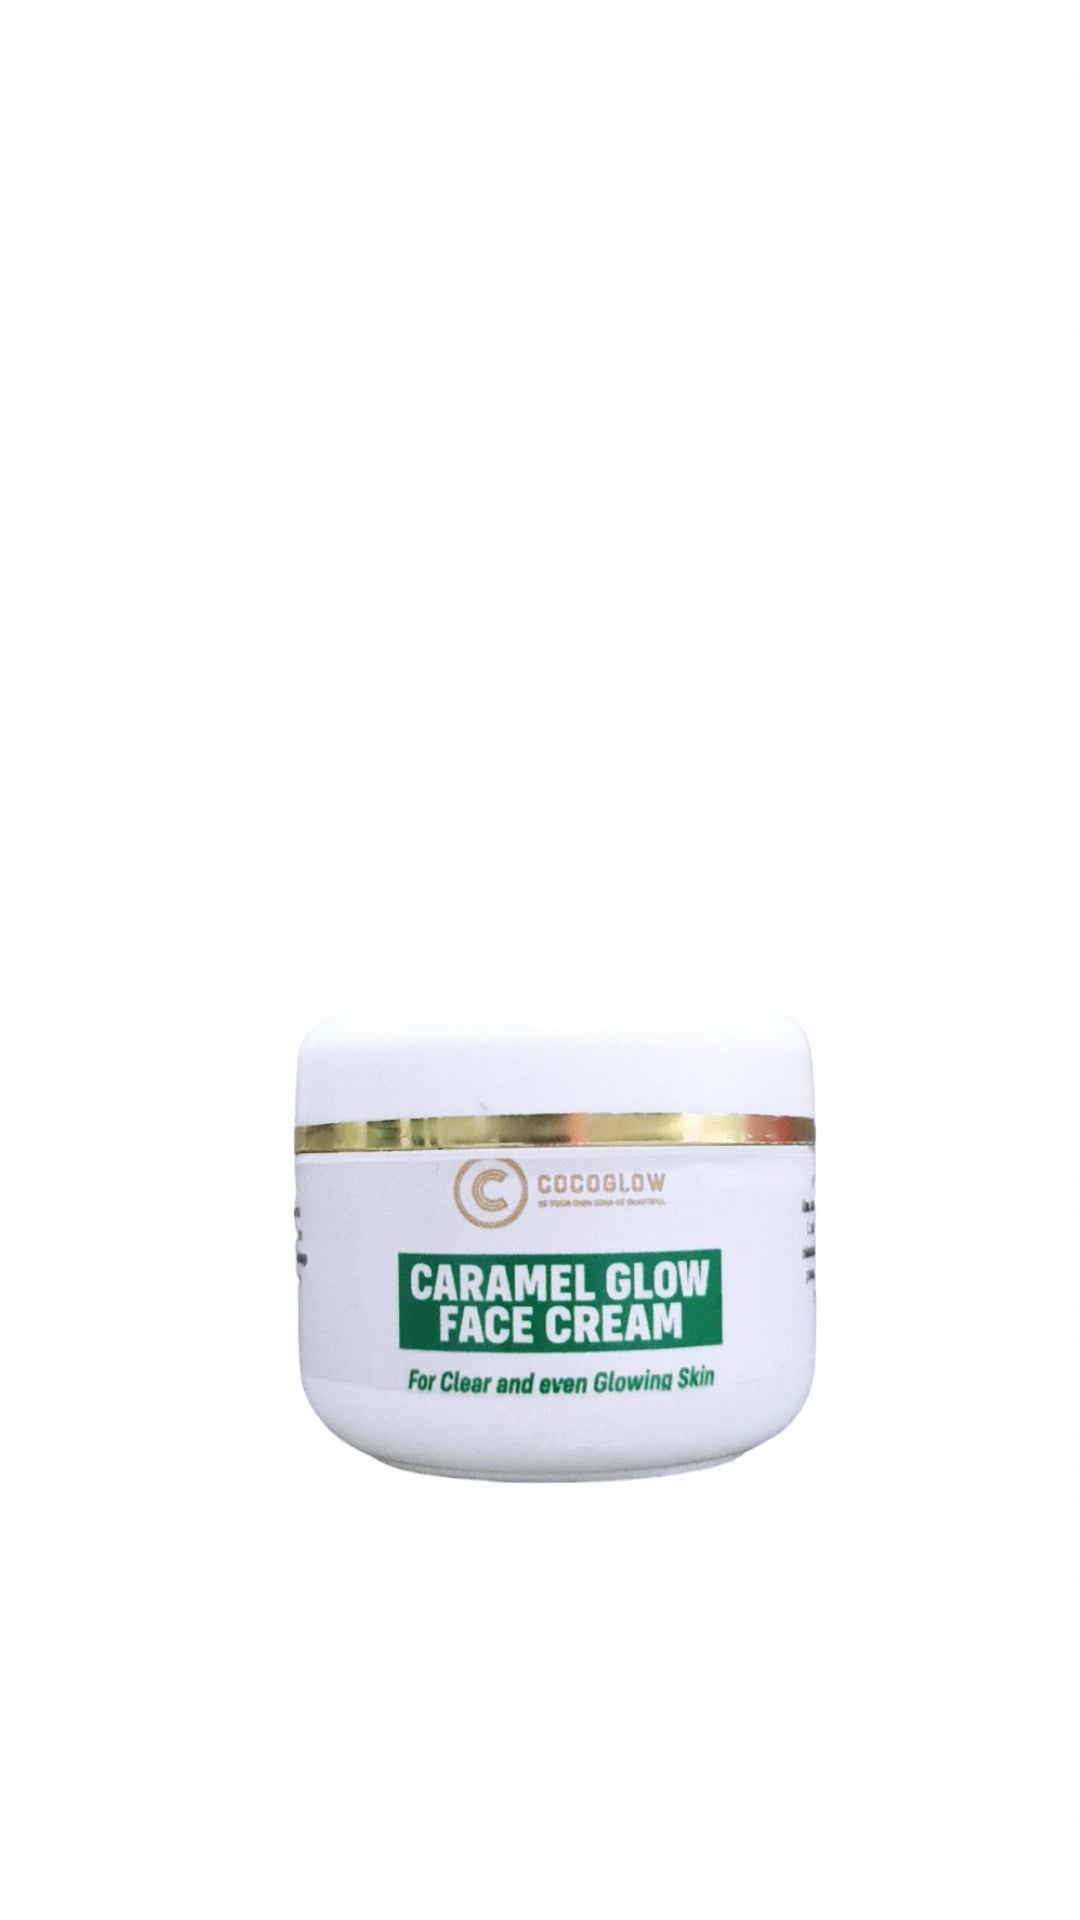 Caramel glow face cream